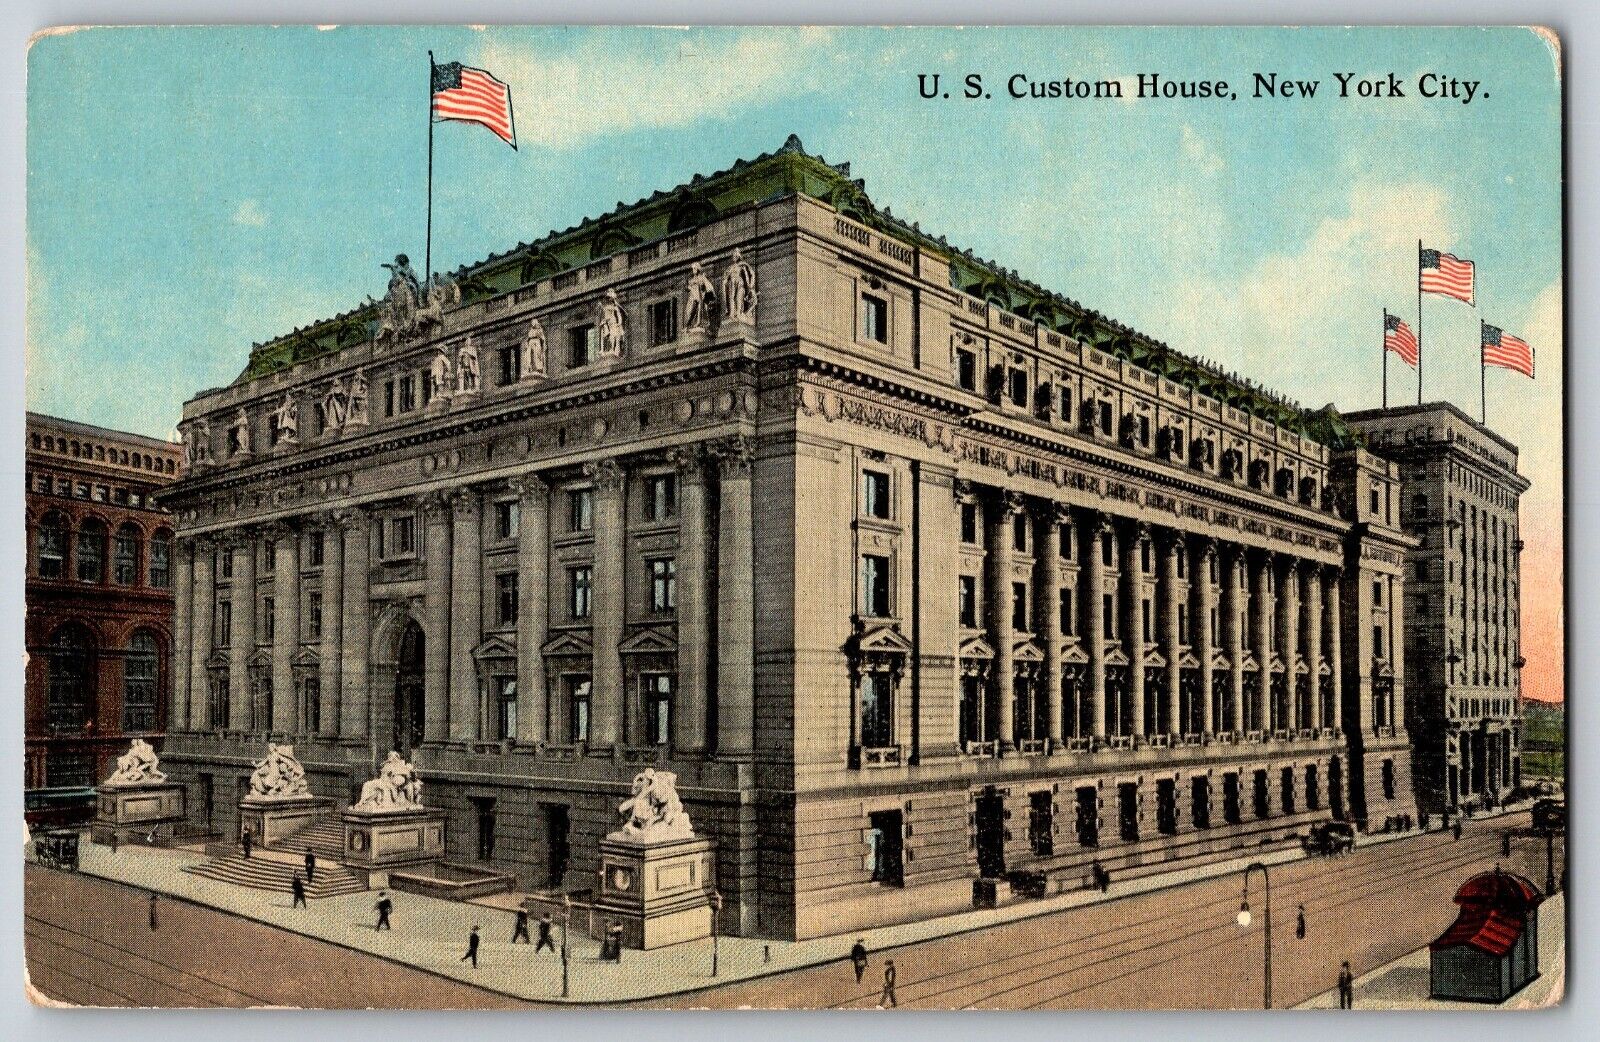 New York NY - U.S. Custom House Building - Vintage Postcard - Unposted